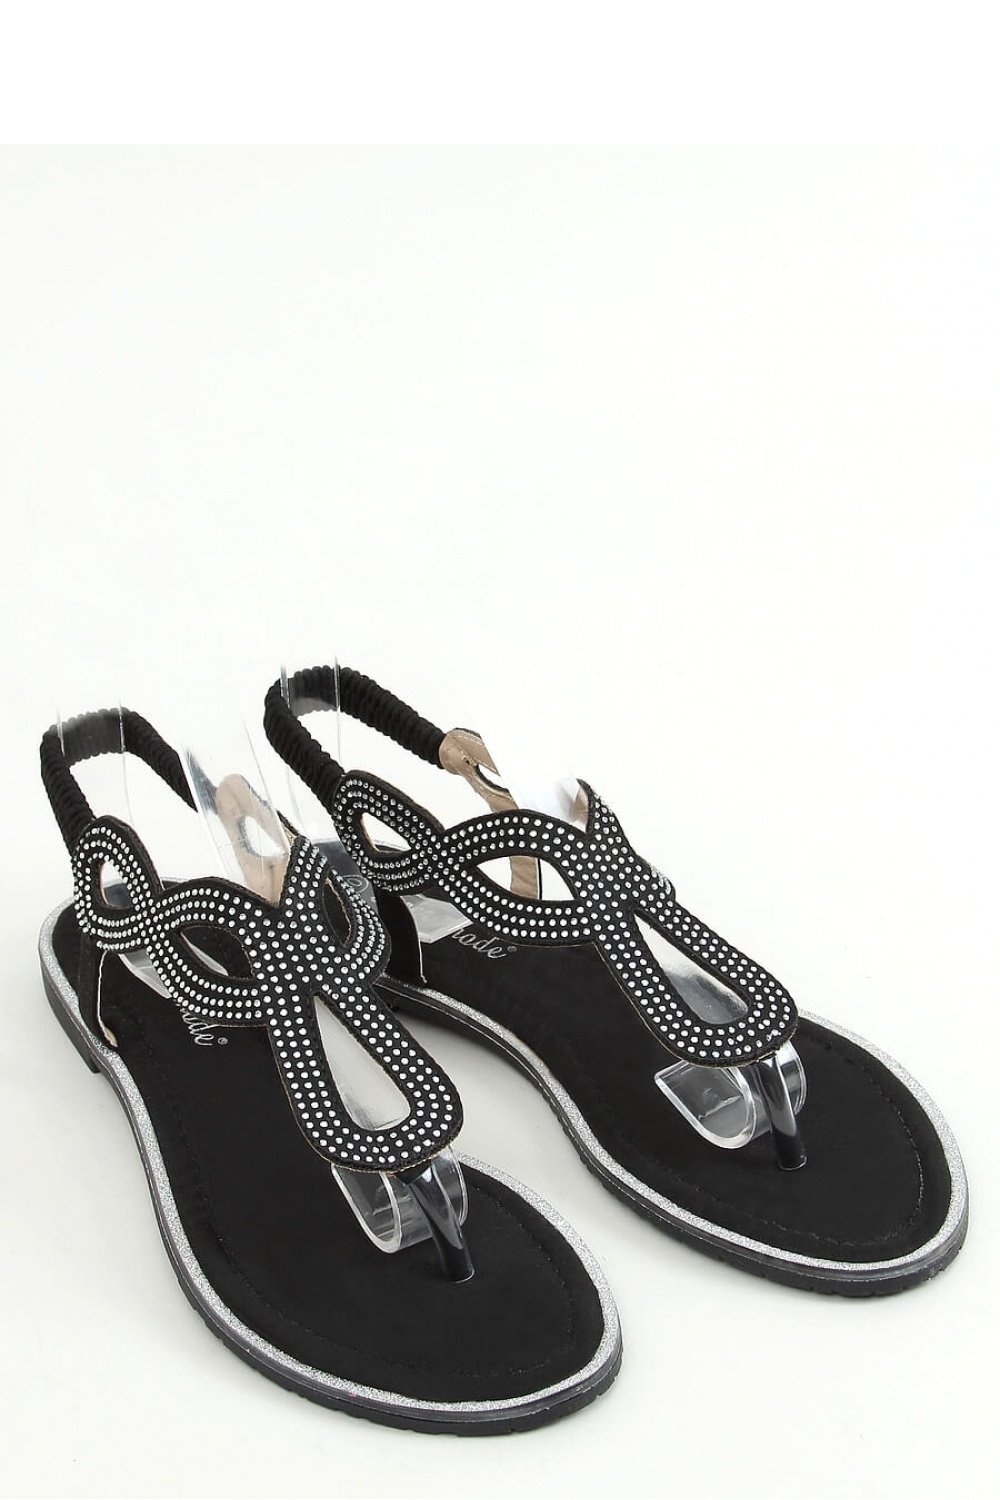 Sandals model 156331 Inello Posh Styles Apparel